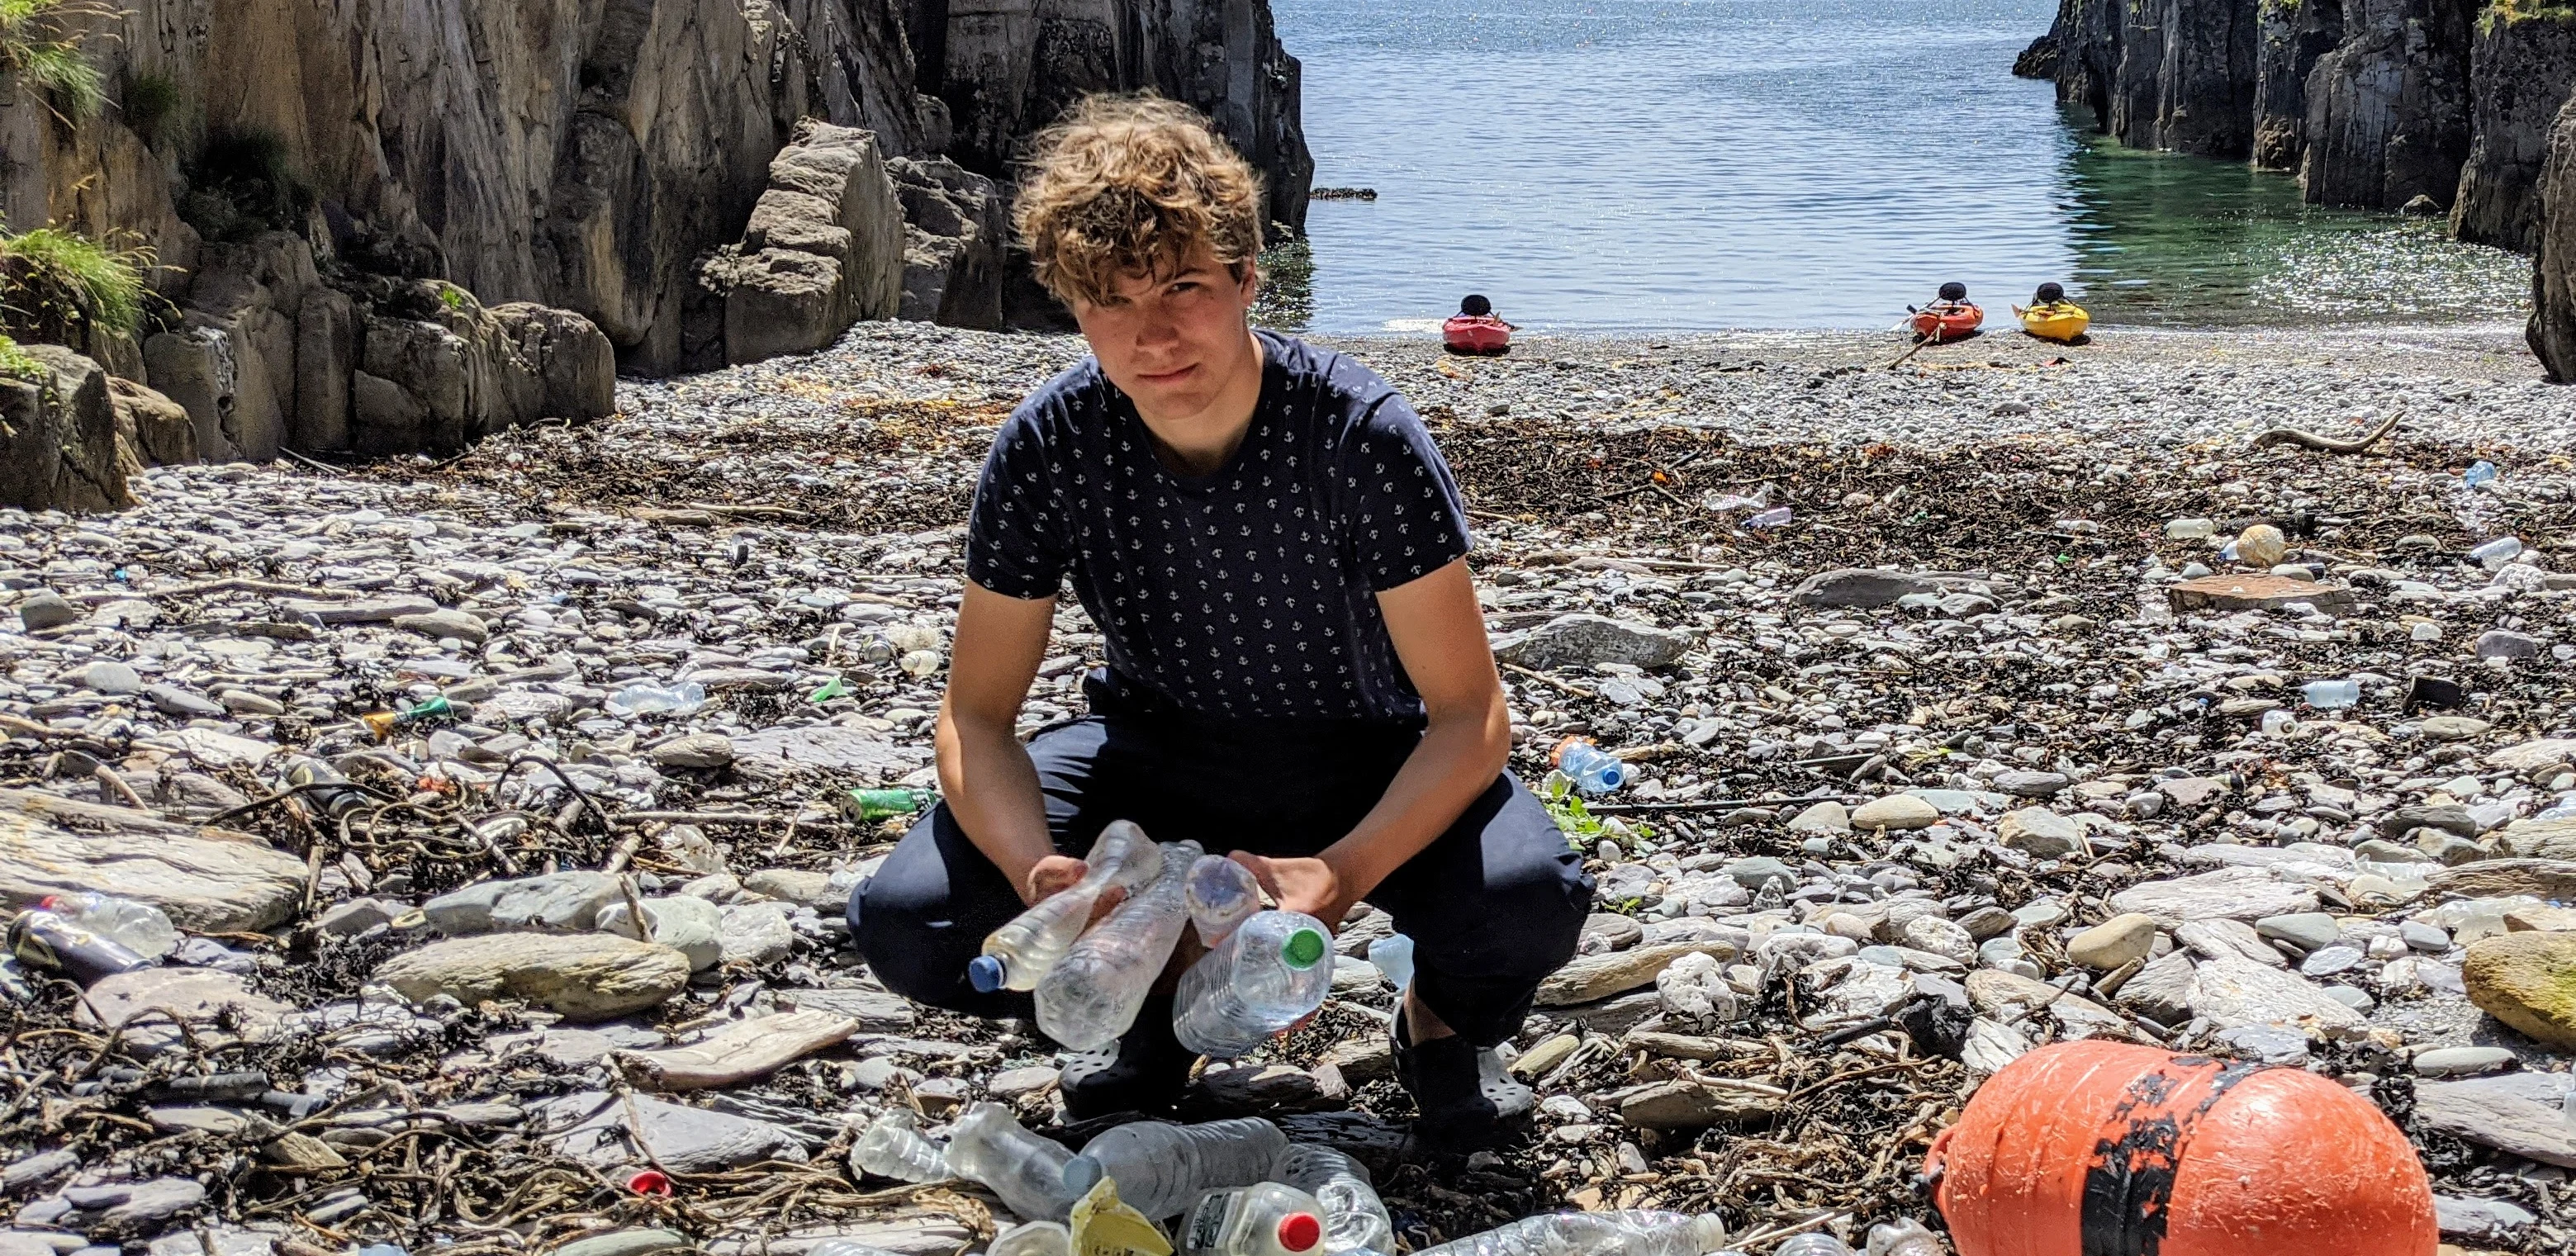 Meet Fionn Ferreira, a young inventor and environmental activist from West Cork, Ireland.